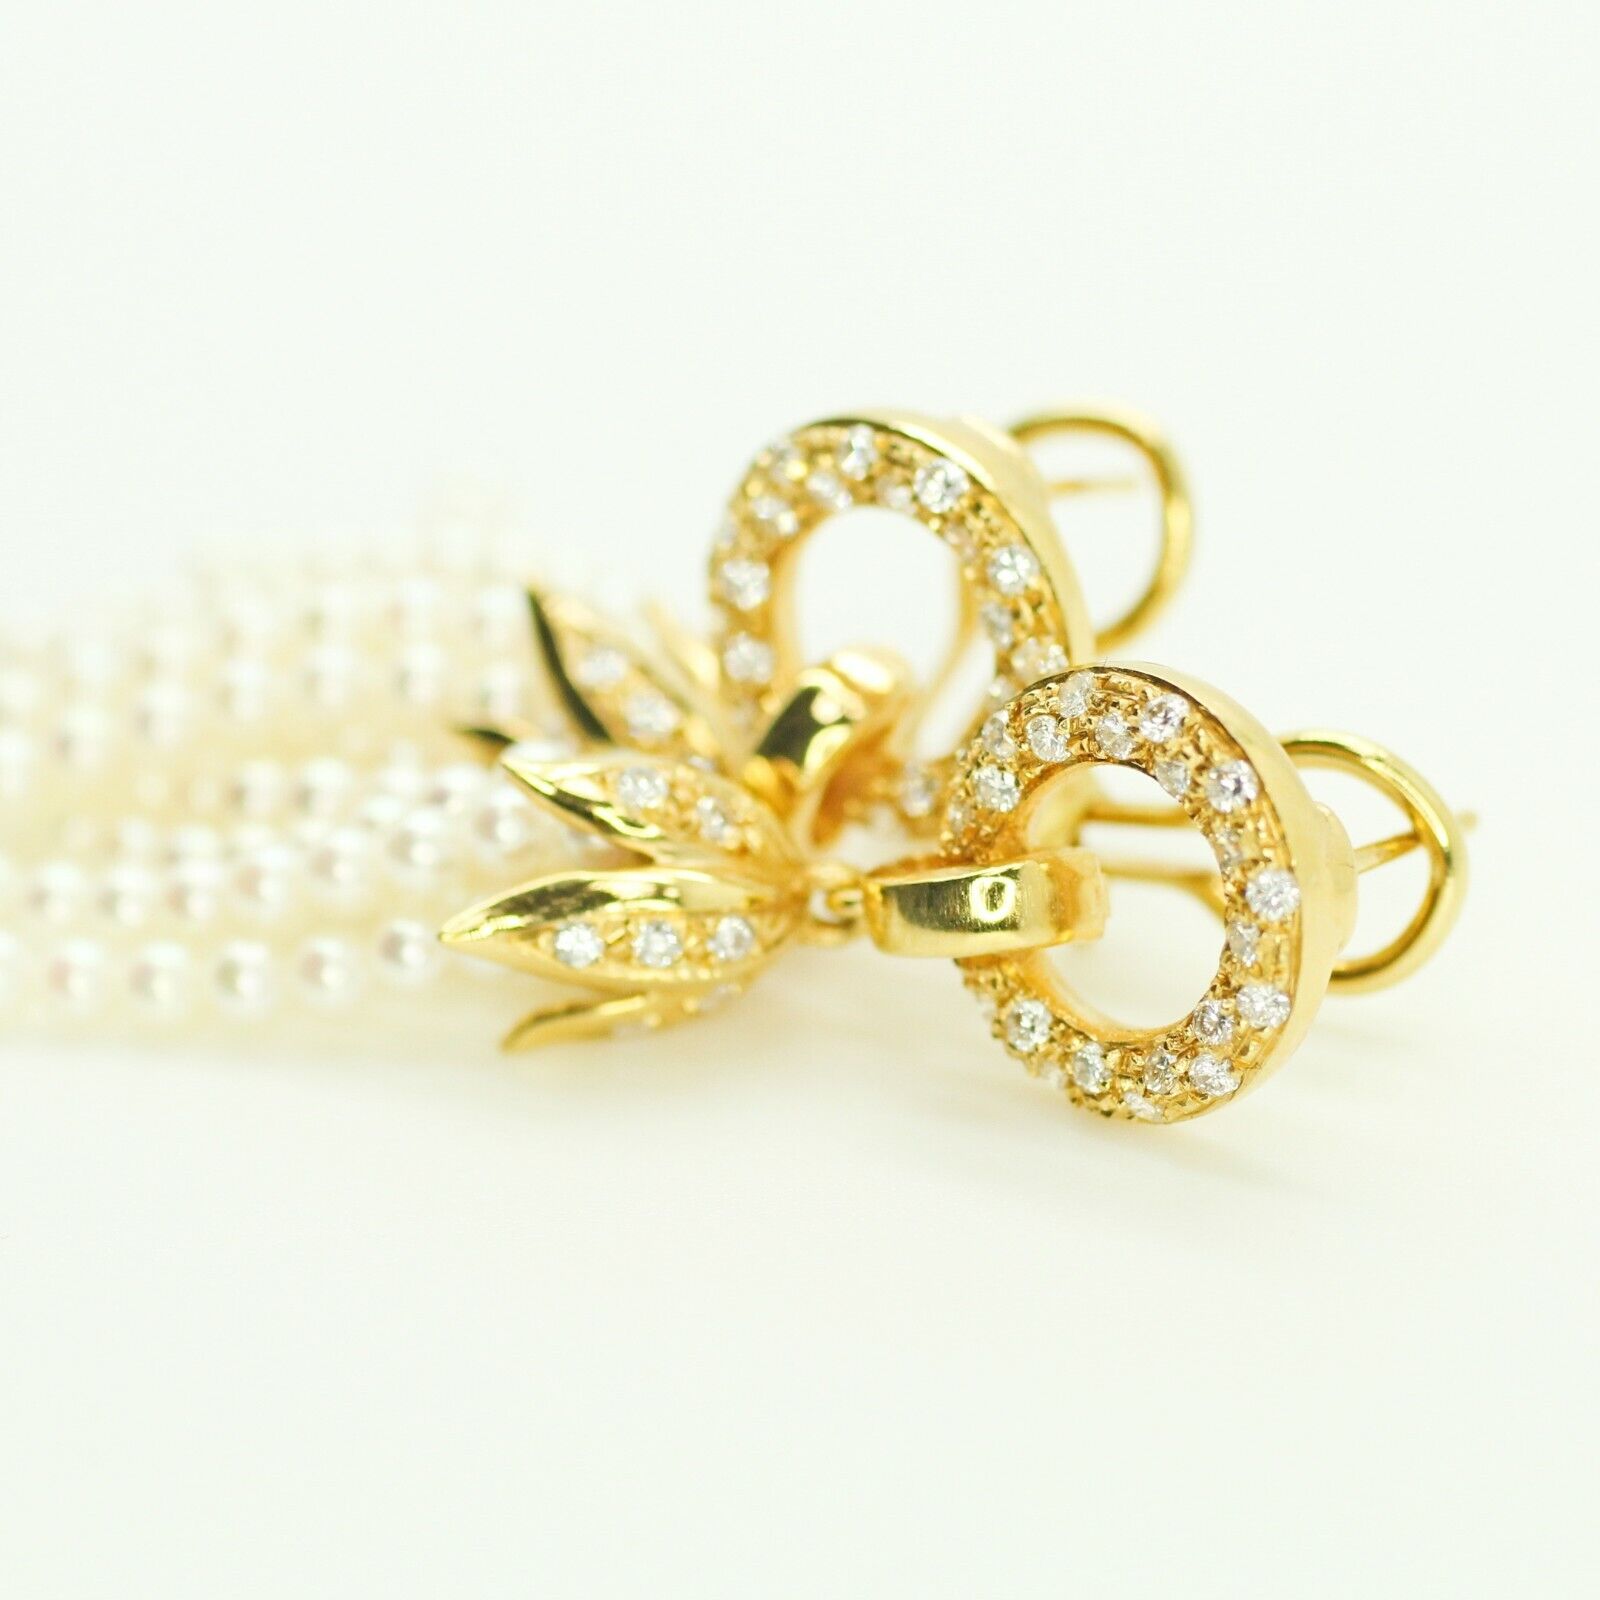 Pearl Tassel Earrings With Diamonds in 18k Yellow Gold